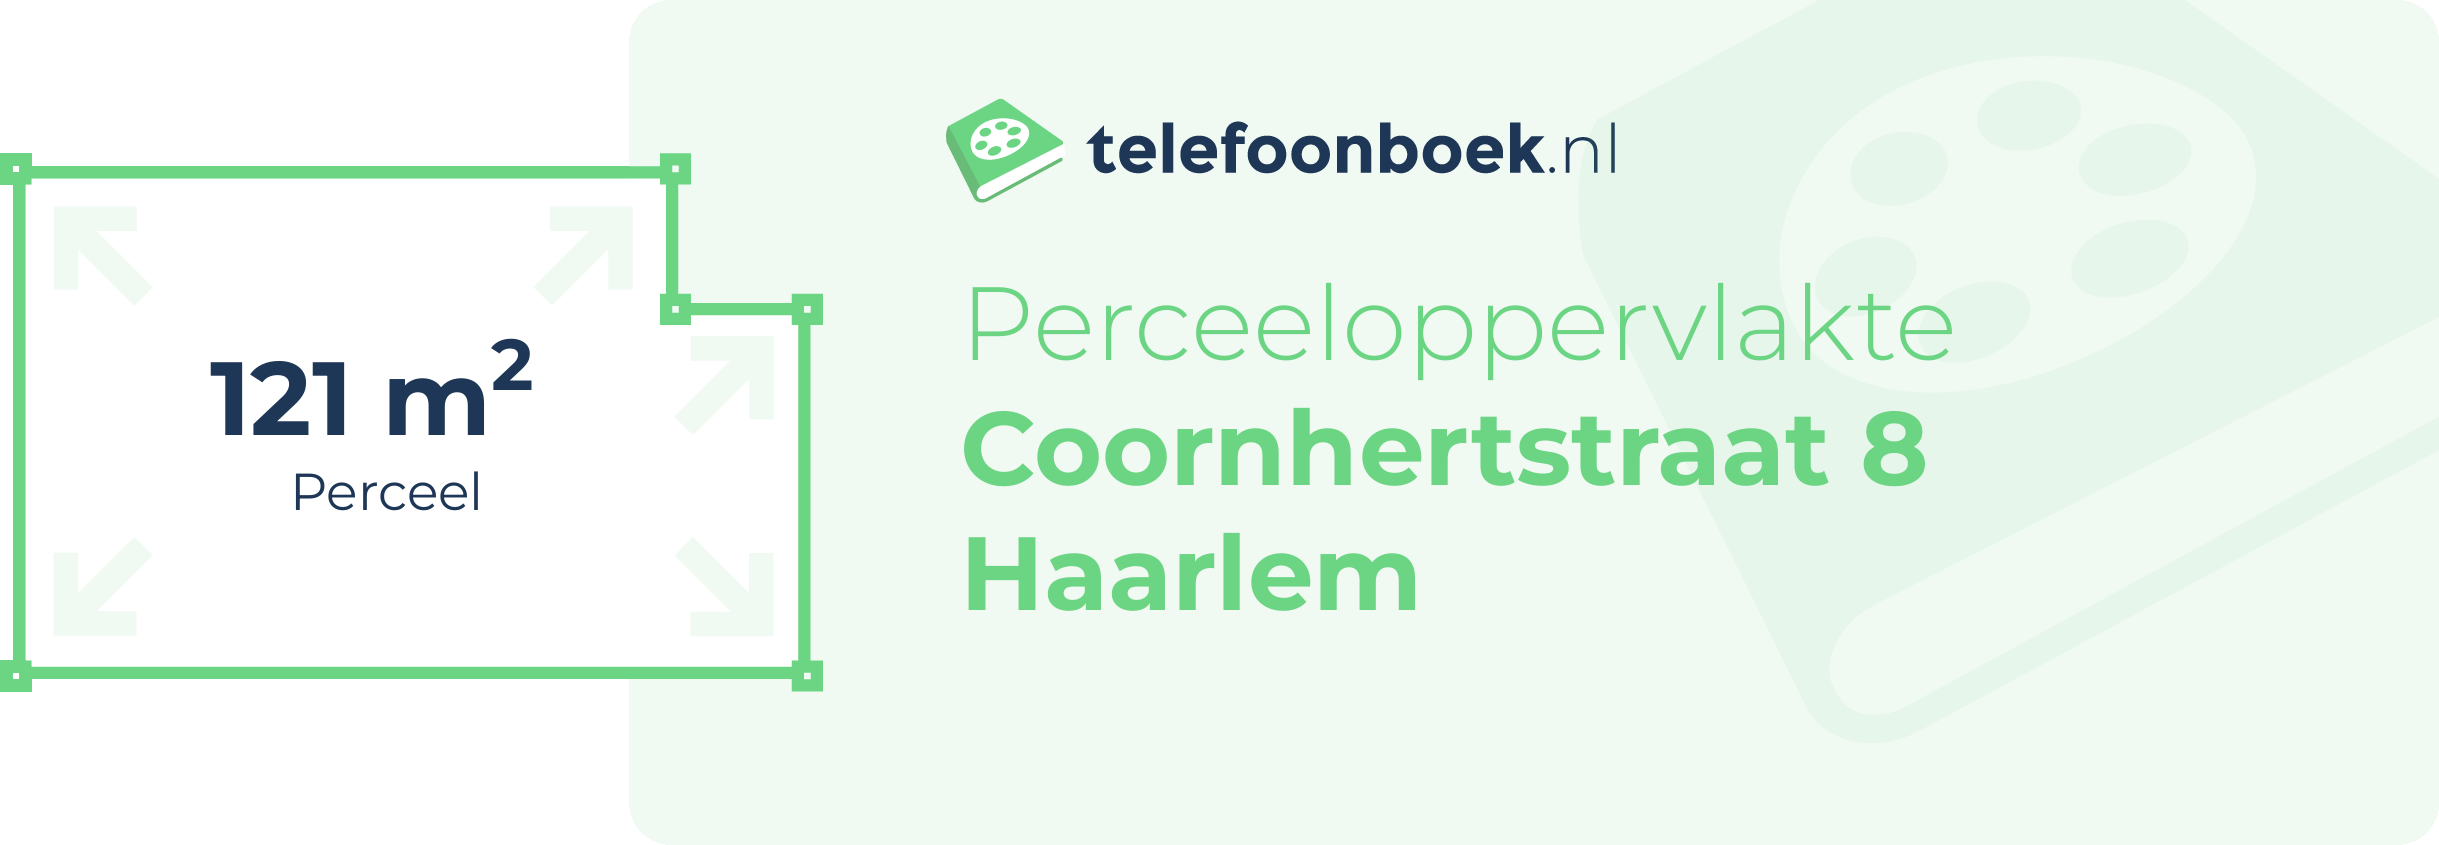 Perceeloppervlakte Coornhertstraat 8 Haarlem